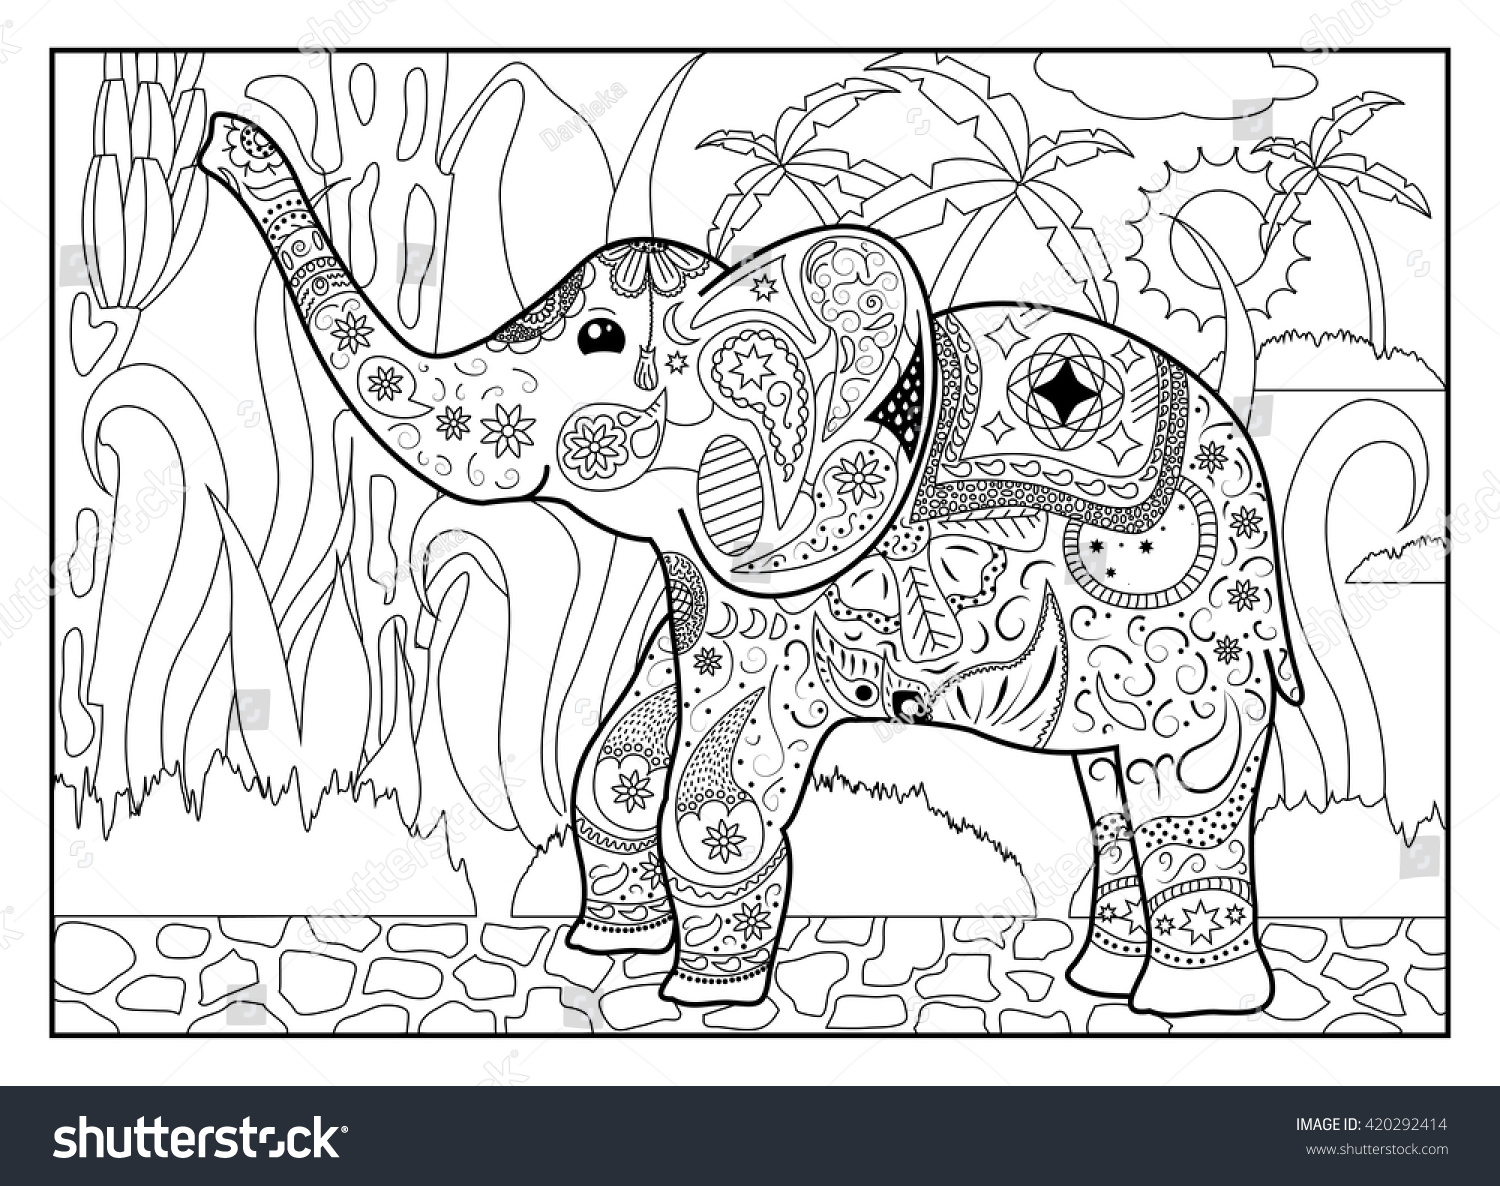 Elephant Jungle Coloring Page Mandala Style Stock Vector (Royalty Free ...